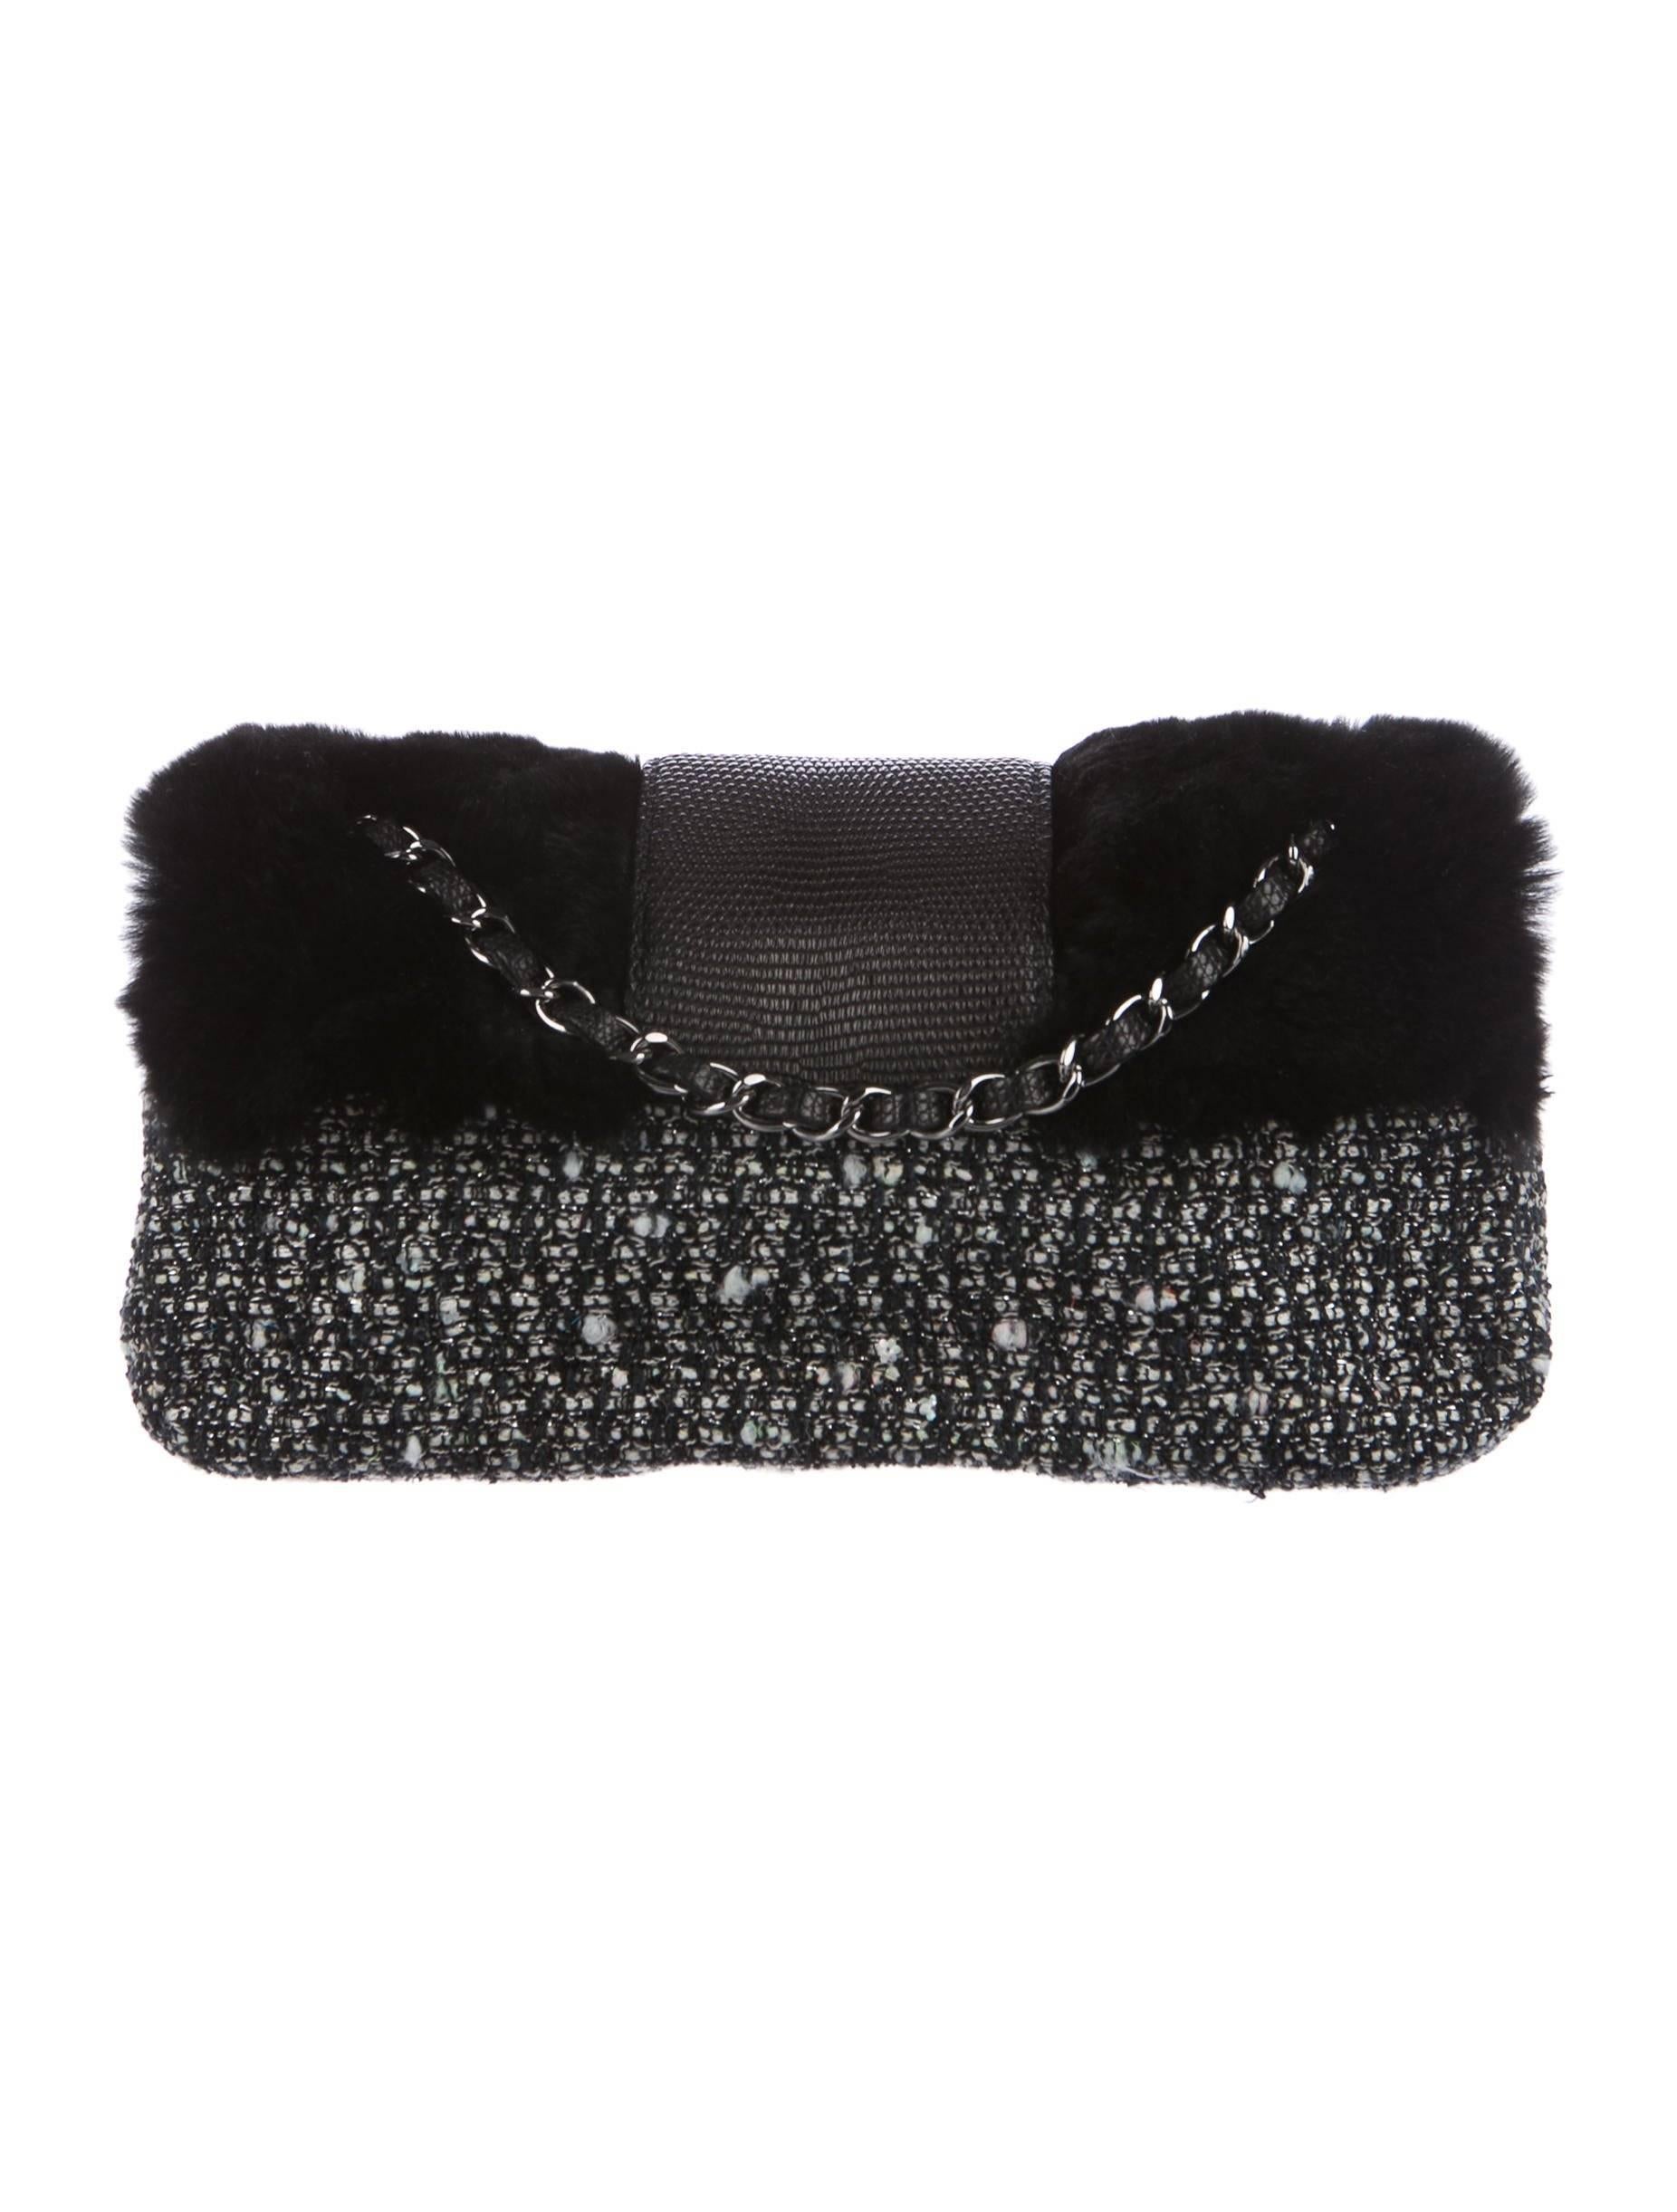 Women's Chanel NEW Limited Edition Black Tweed Leather Lizard Fur Shoulder Flap Bag